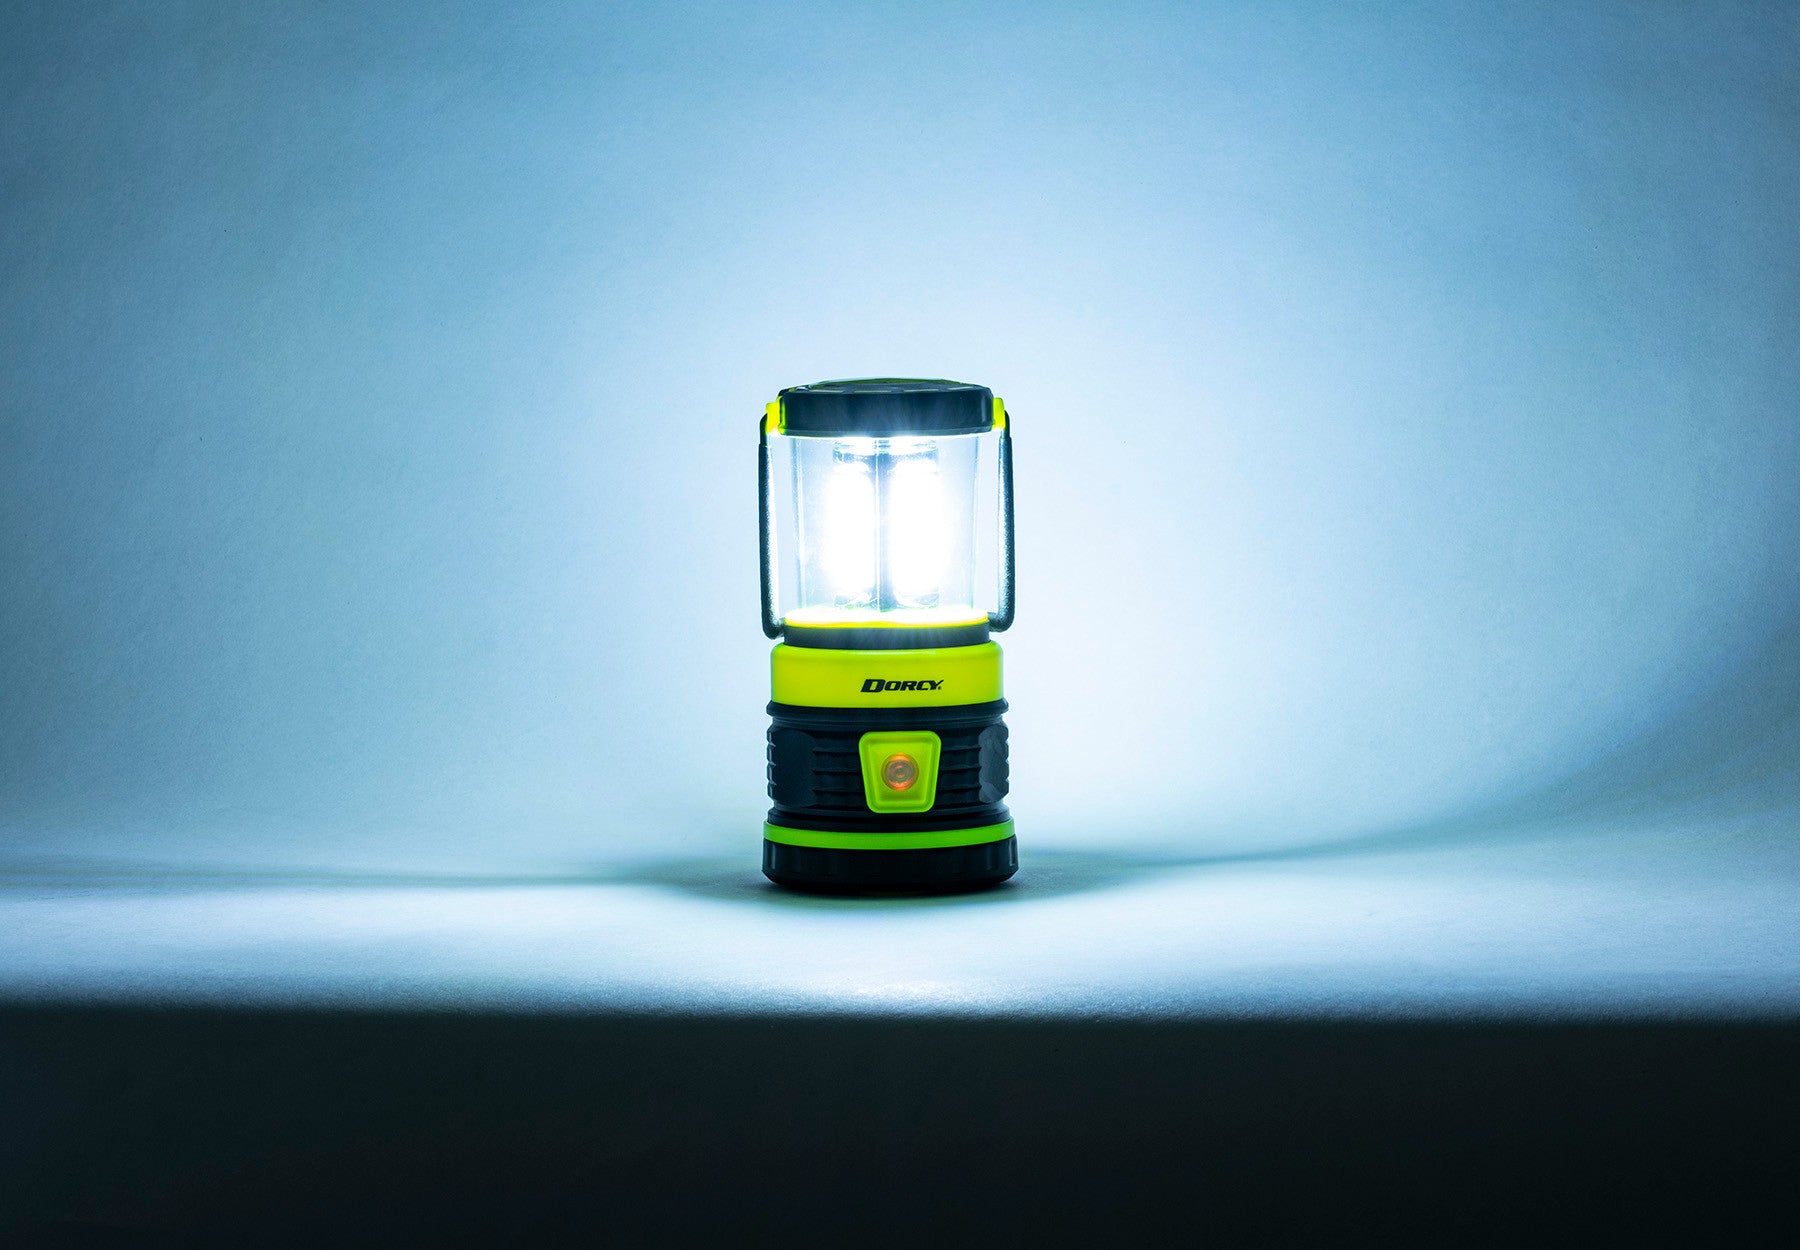 UCO Sprout + Mini Lantern - Lithium, Blue